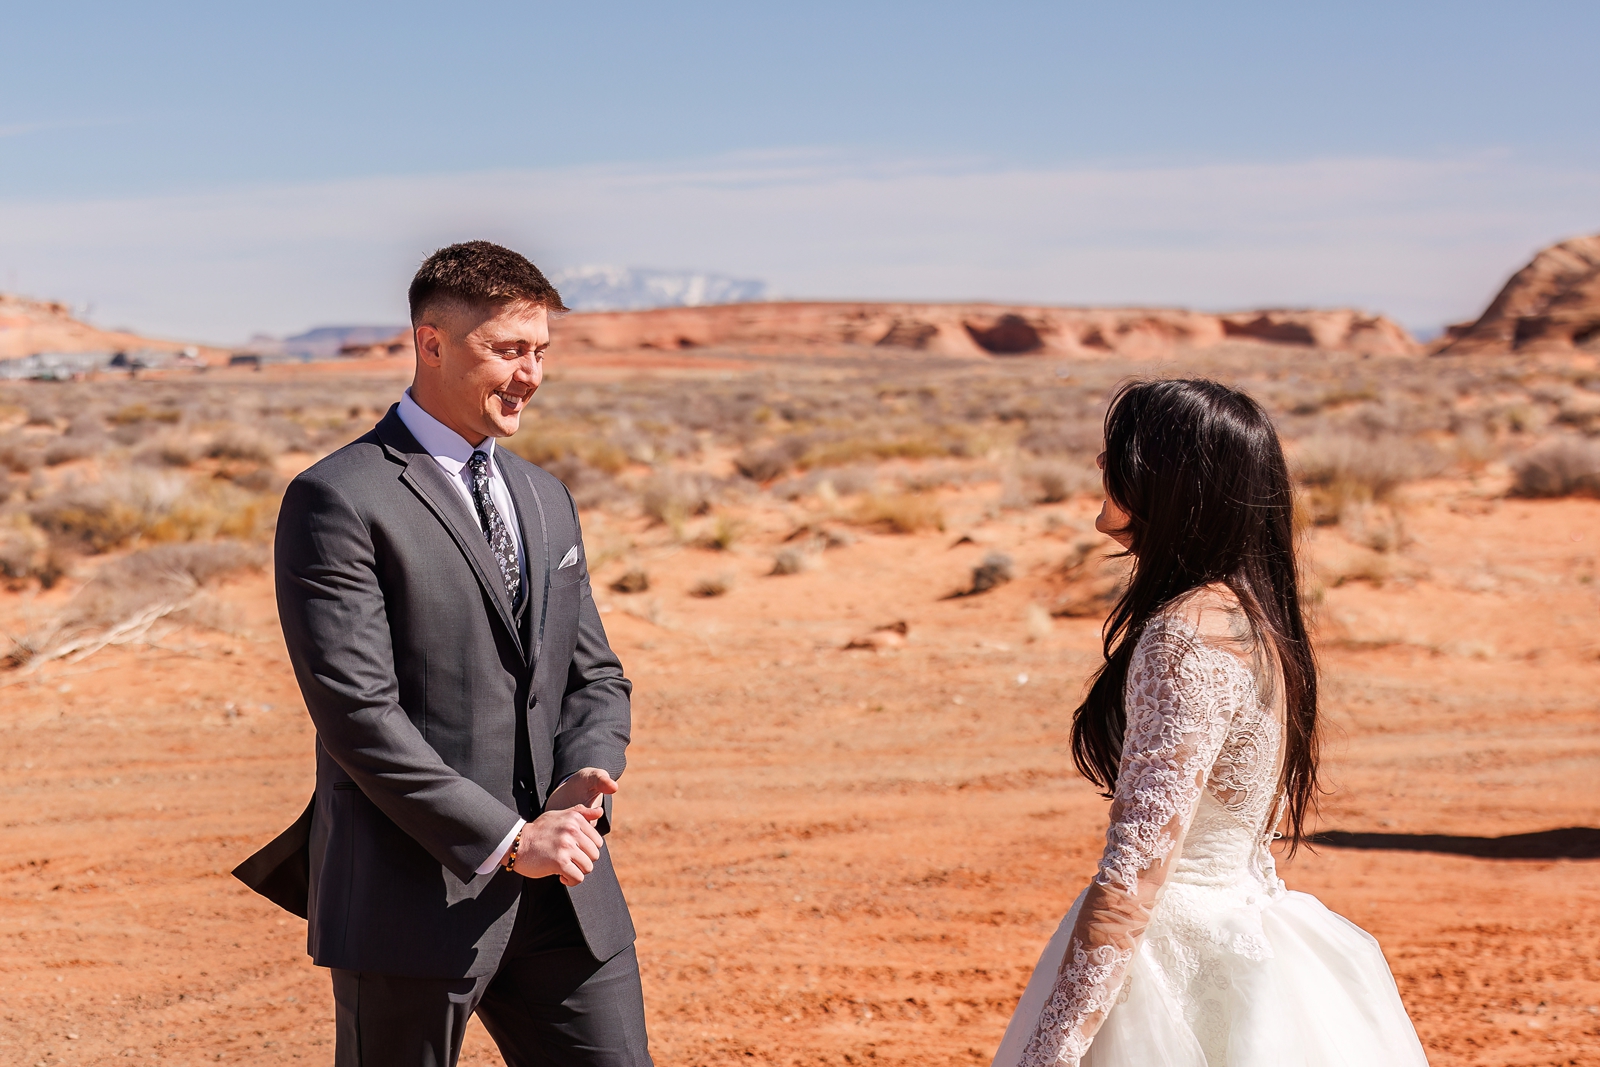 This couple eloped at Horseshoe Bend, Arizona and hiked the Nautilus slot canyon near Kanab, Utah as part of their celebrations